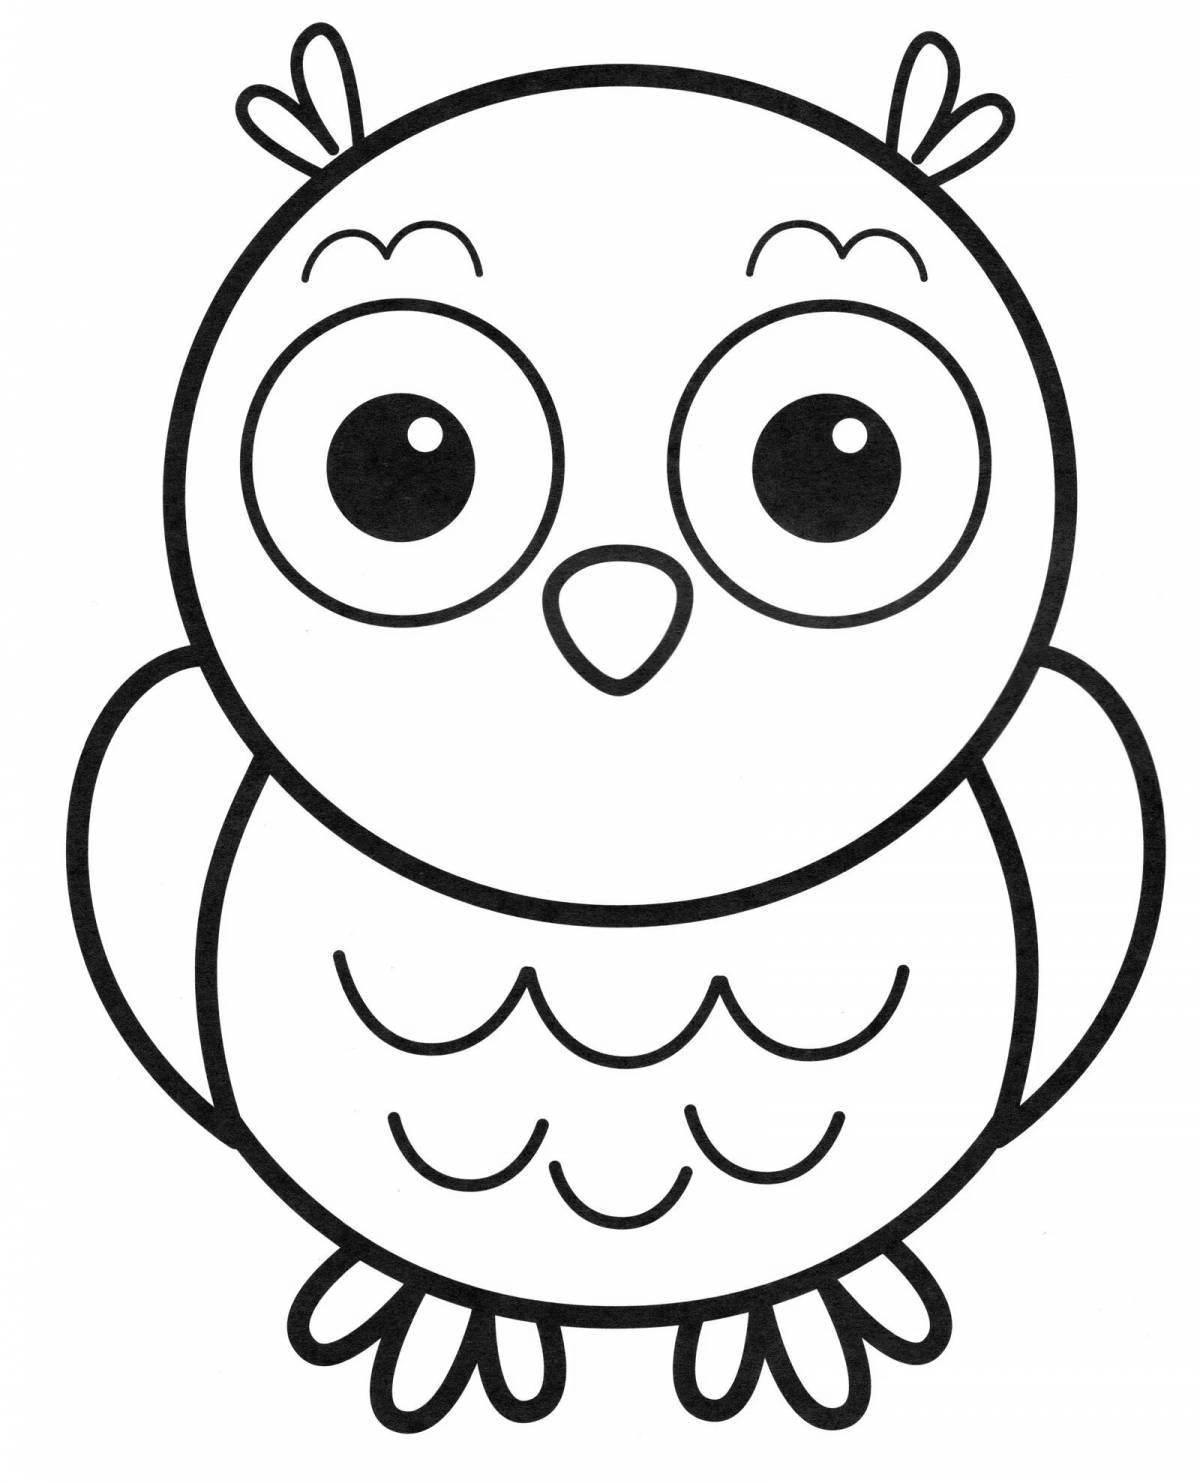 Rampant owl coloring book for kids